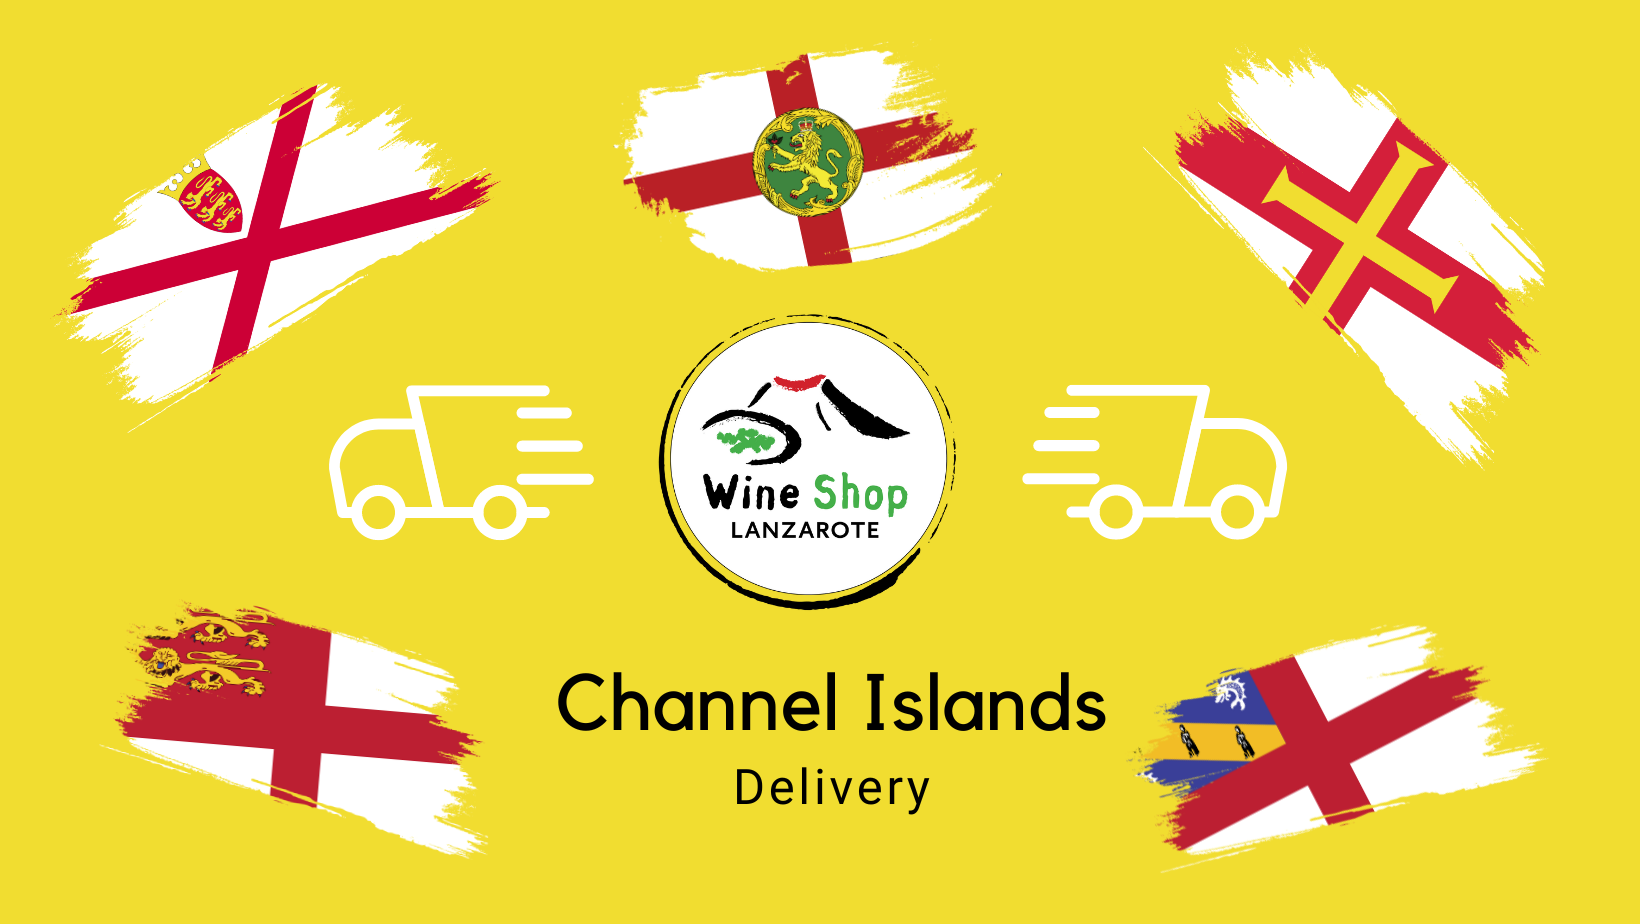 Wine Shop Lanzarote - Channel Island Delivery